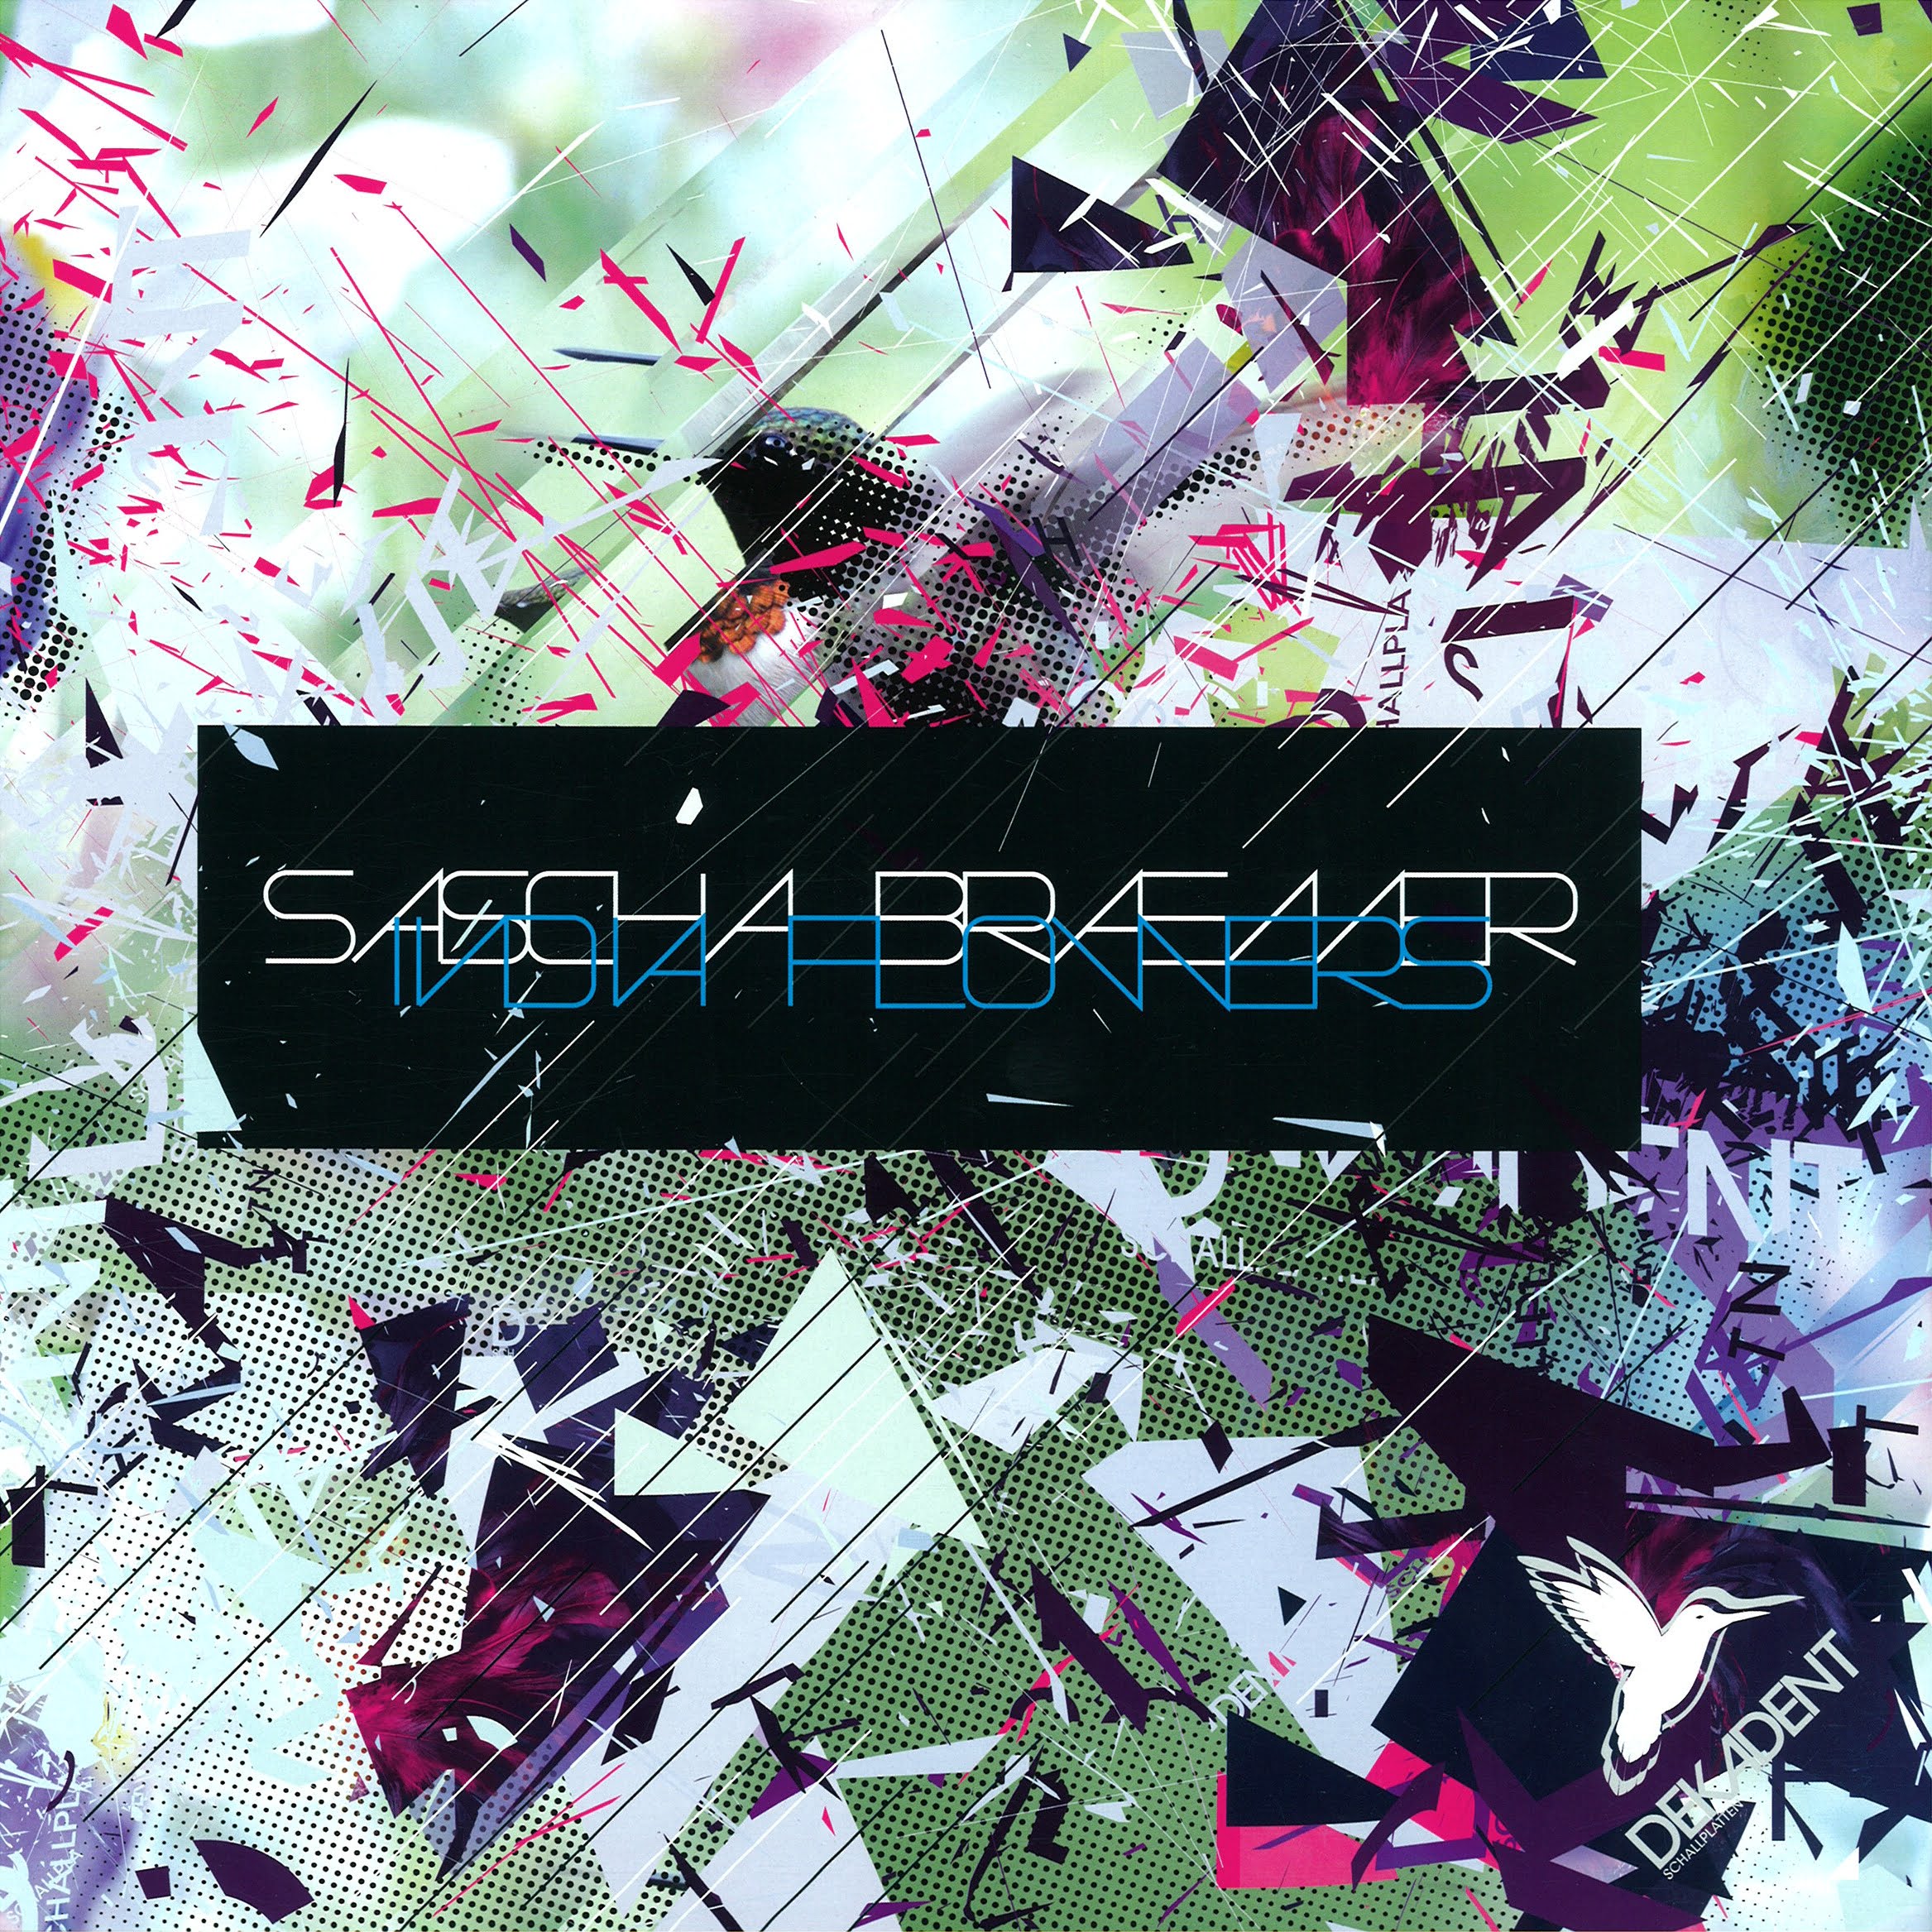 image cover: Sascha Braemer - India Flowers